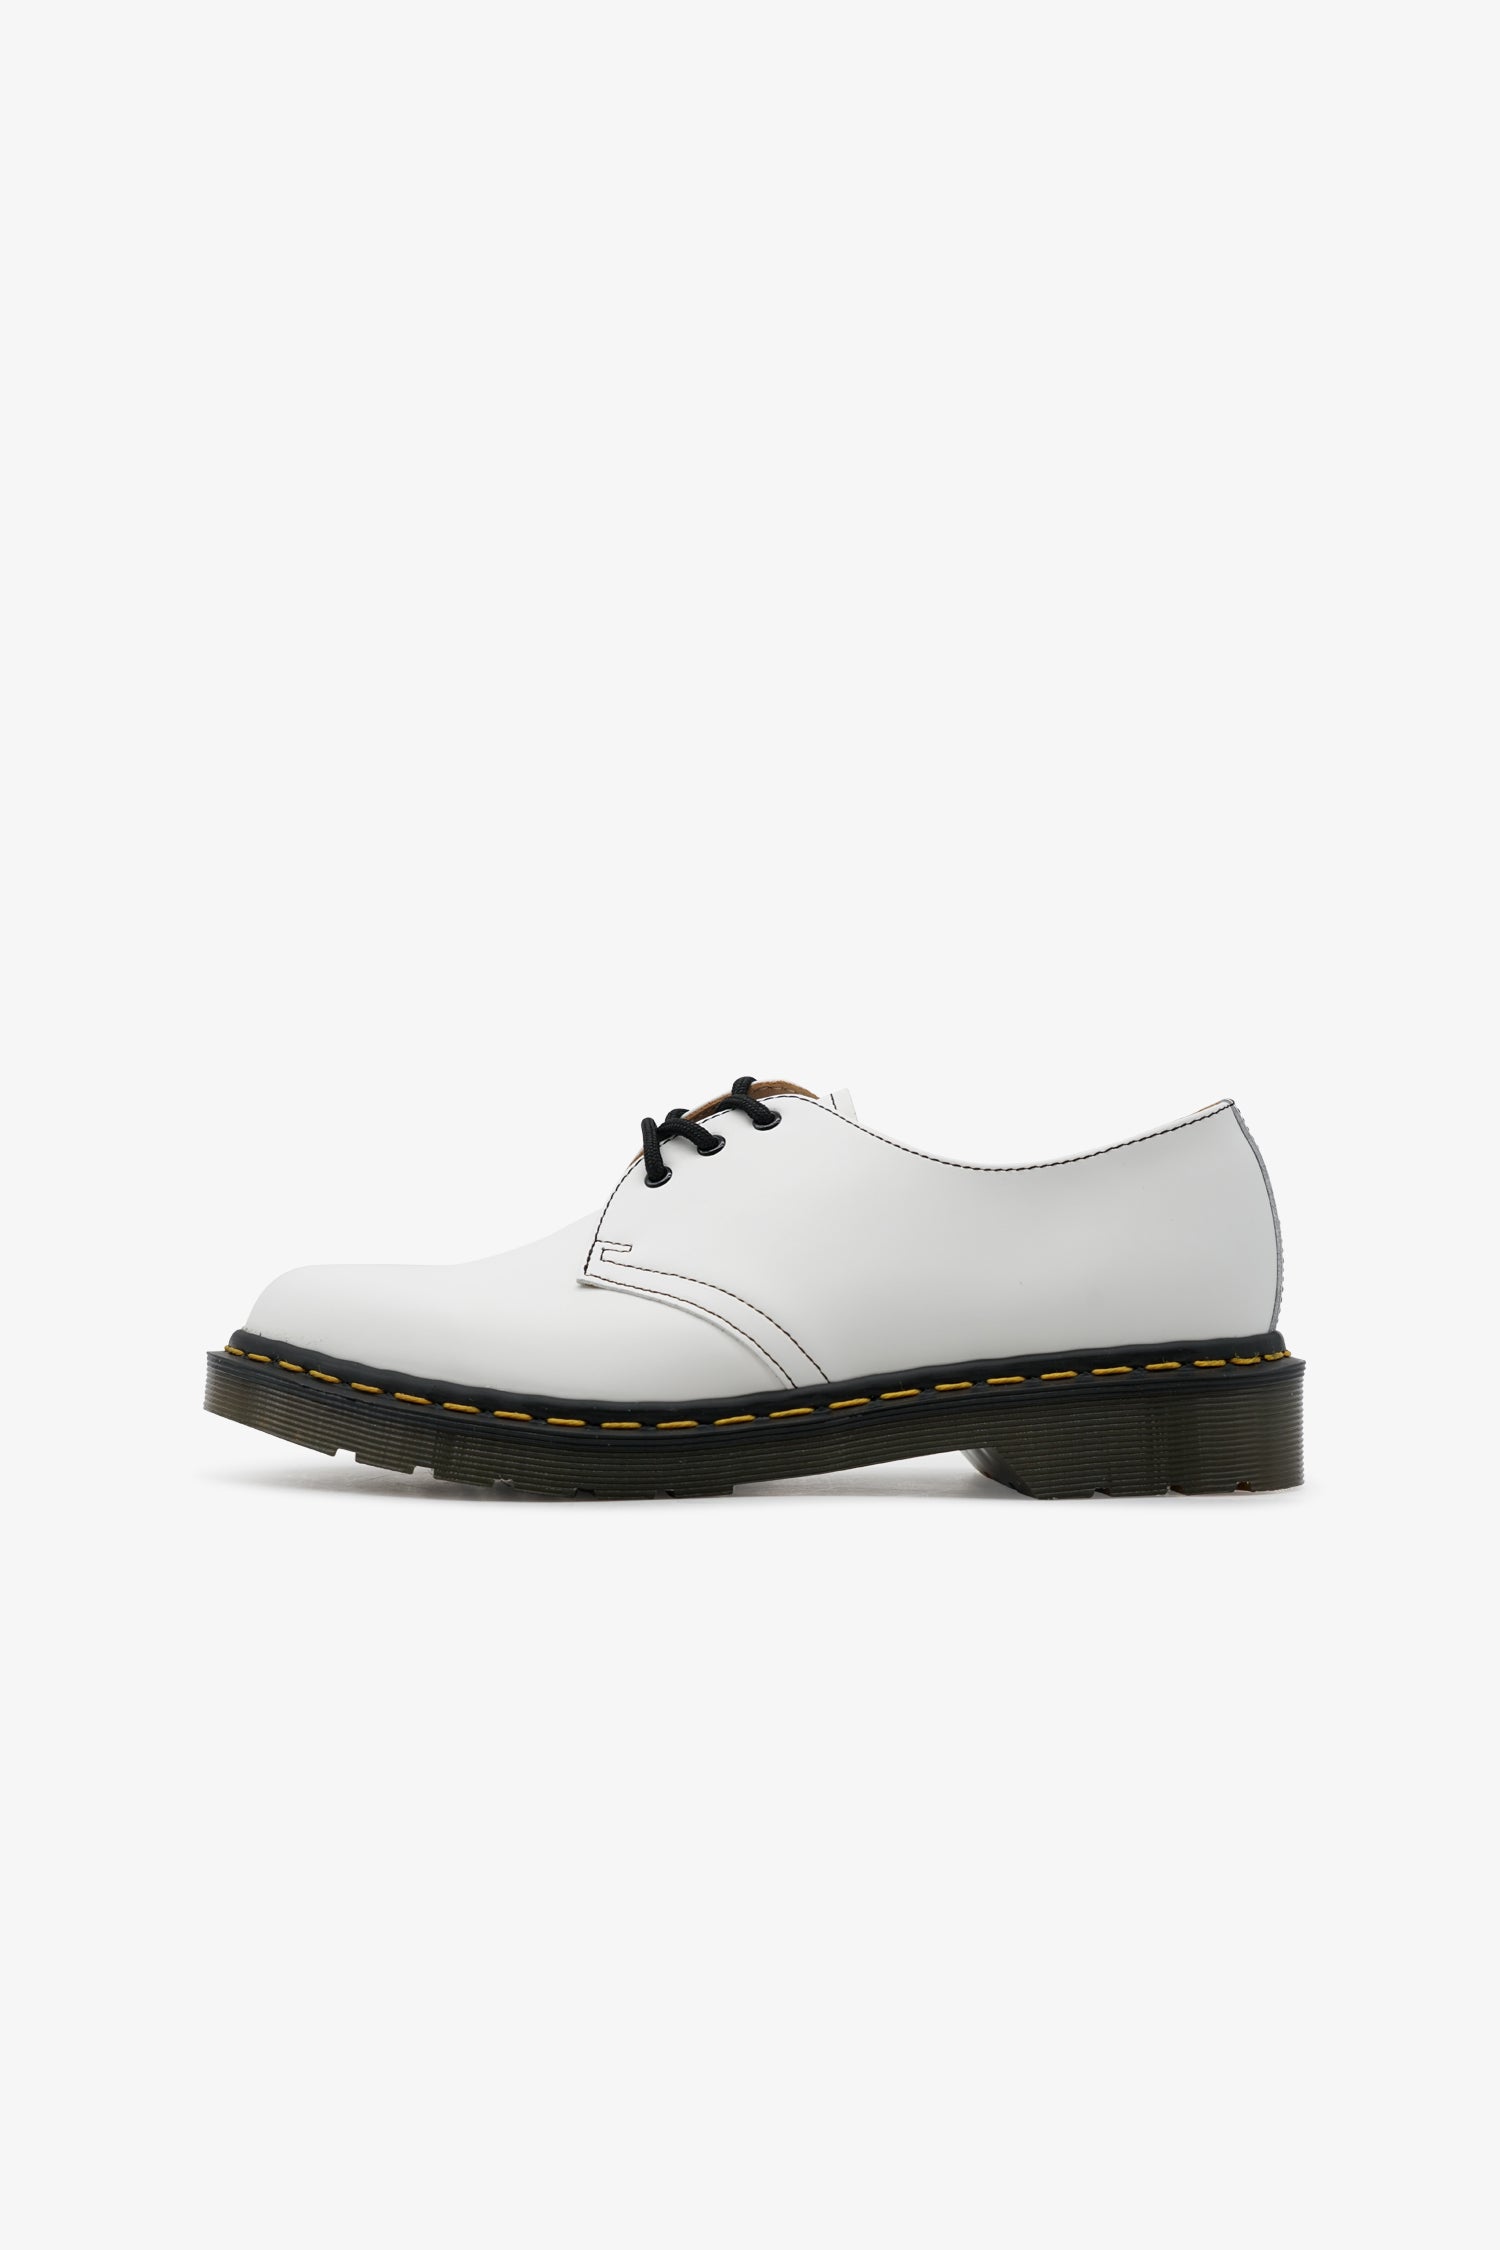 Selectshop FRAME - COMME DES GARÇONS COMME DES GARÇONS Dr. Martens 1461 Derbys "Made In England" Footwear Dubai